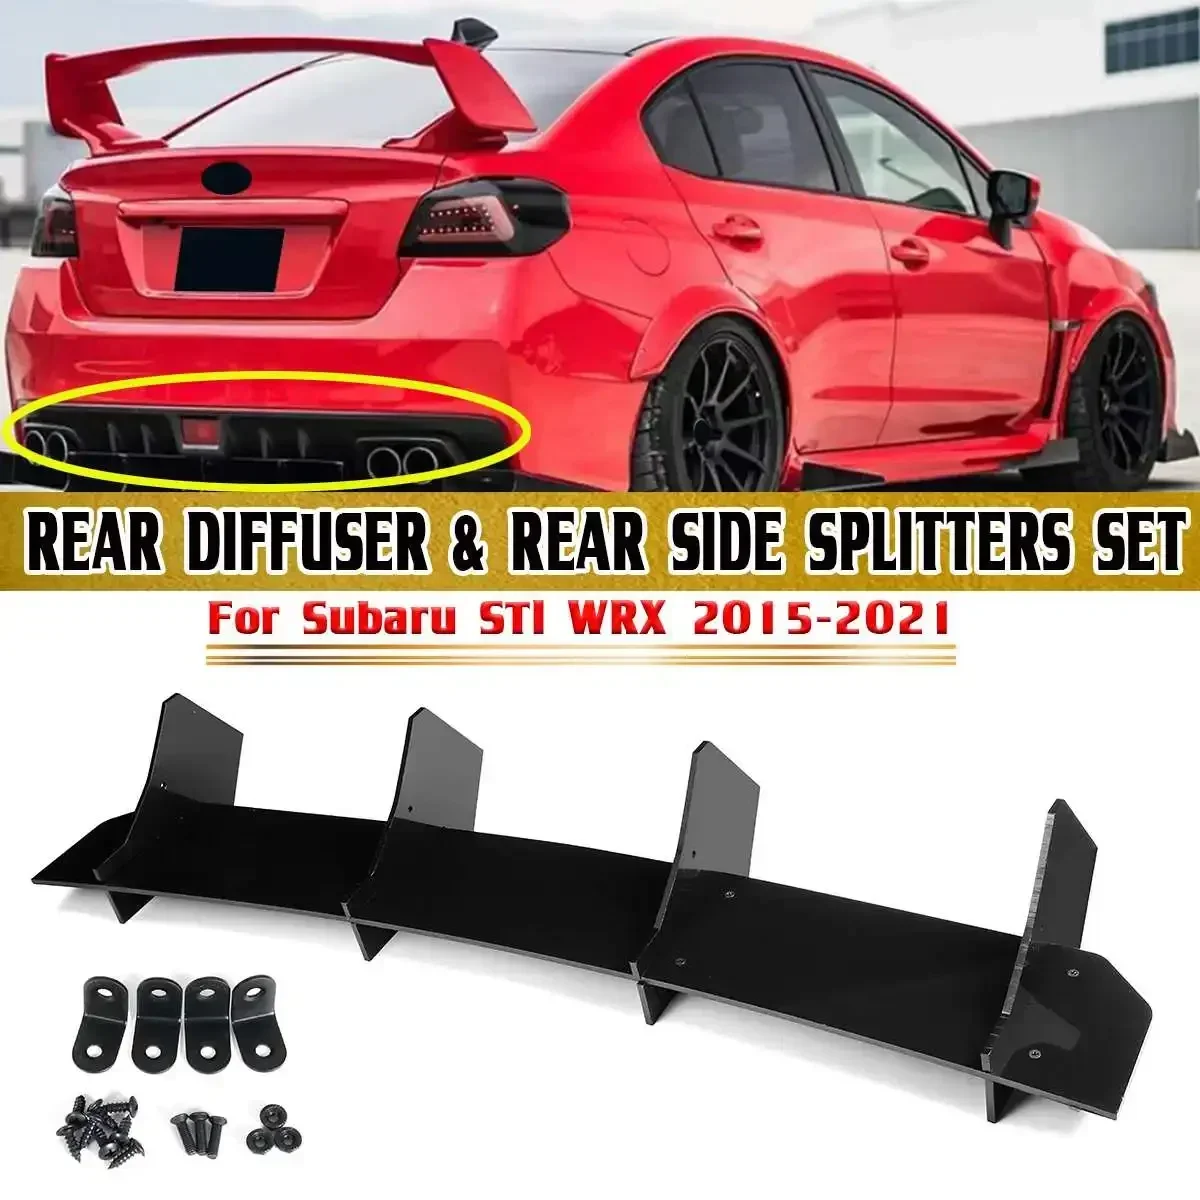 

High Quality Car Rear Bumper Diffuser Rear Side Splitters Set For Subaru STI WRX 2015-2021 Rear Bumper Diffuser Lip Body Kit